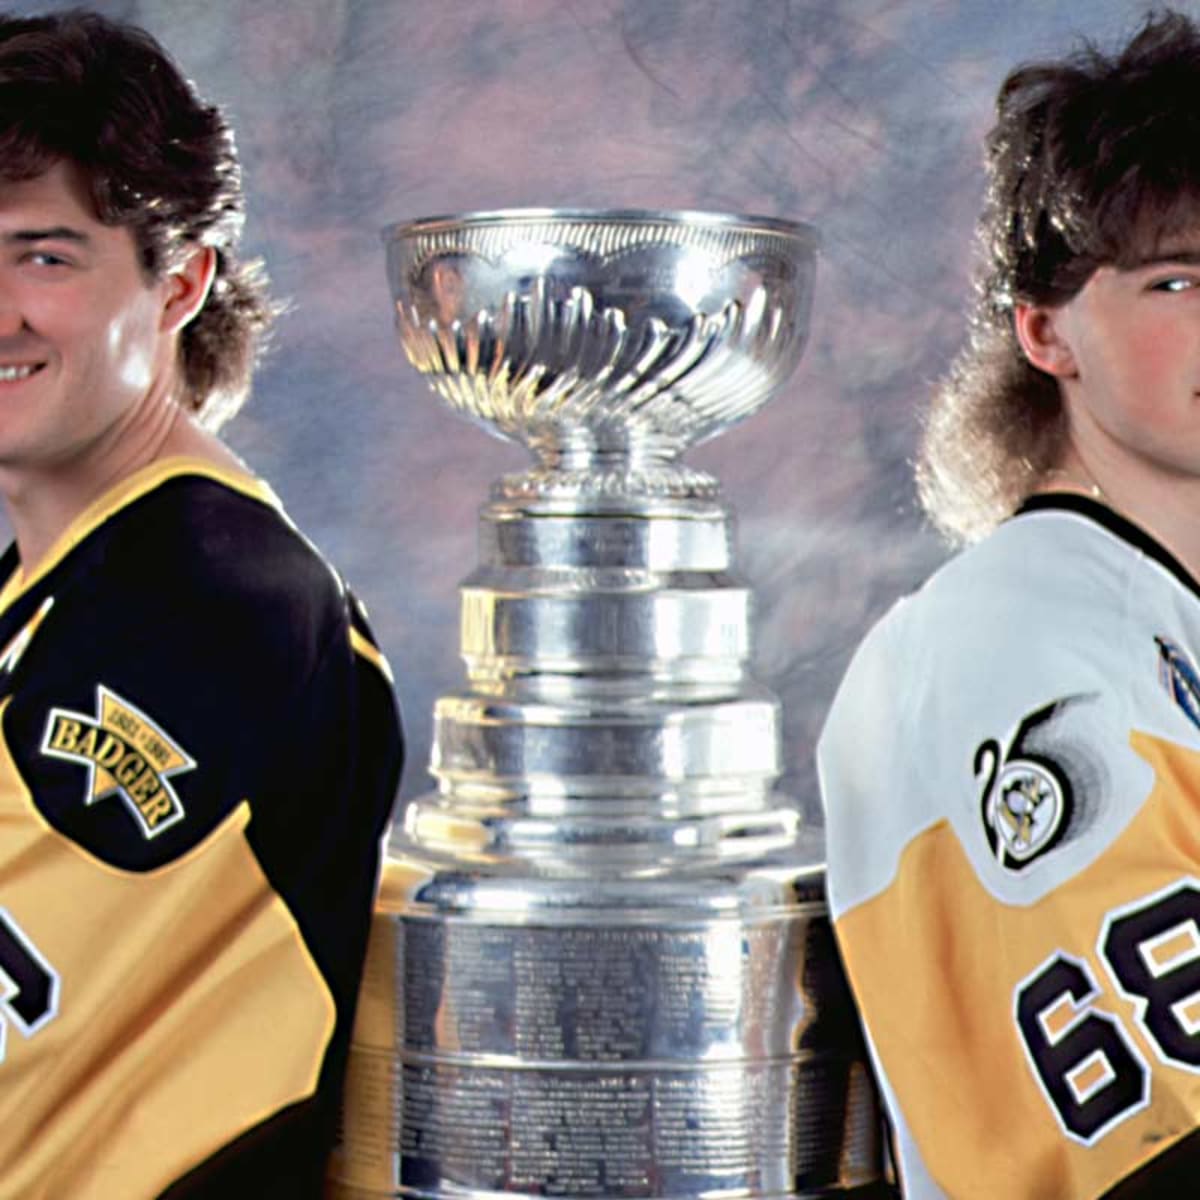 June 4, 1992 - Pittsburgh Penguins Stanley Cup Celebration at